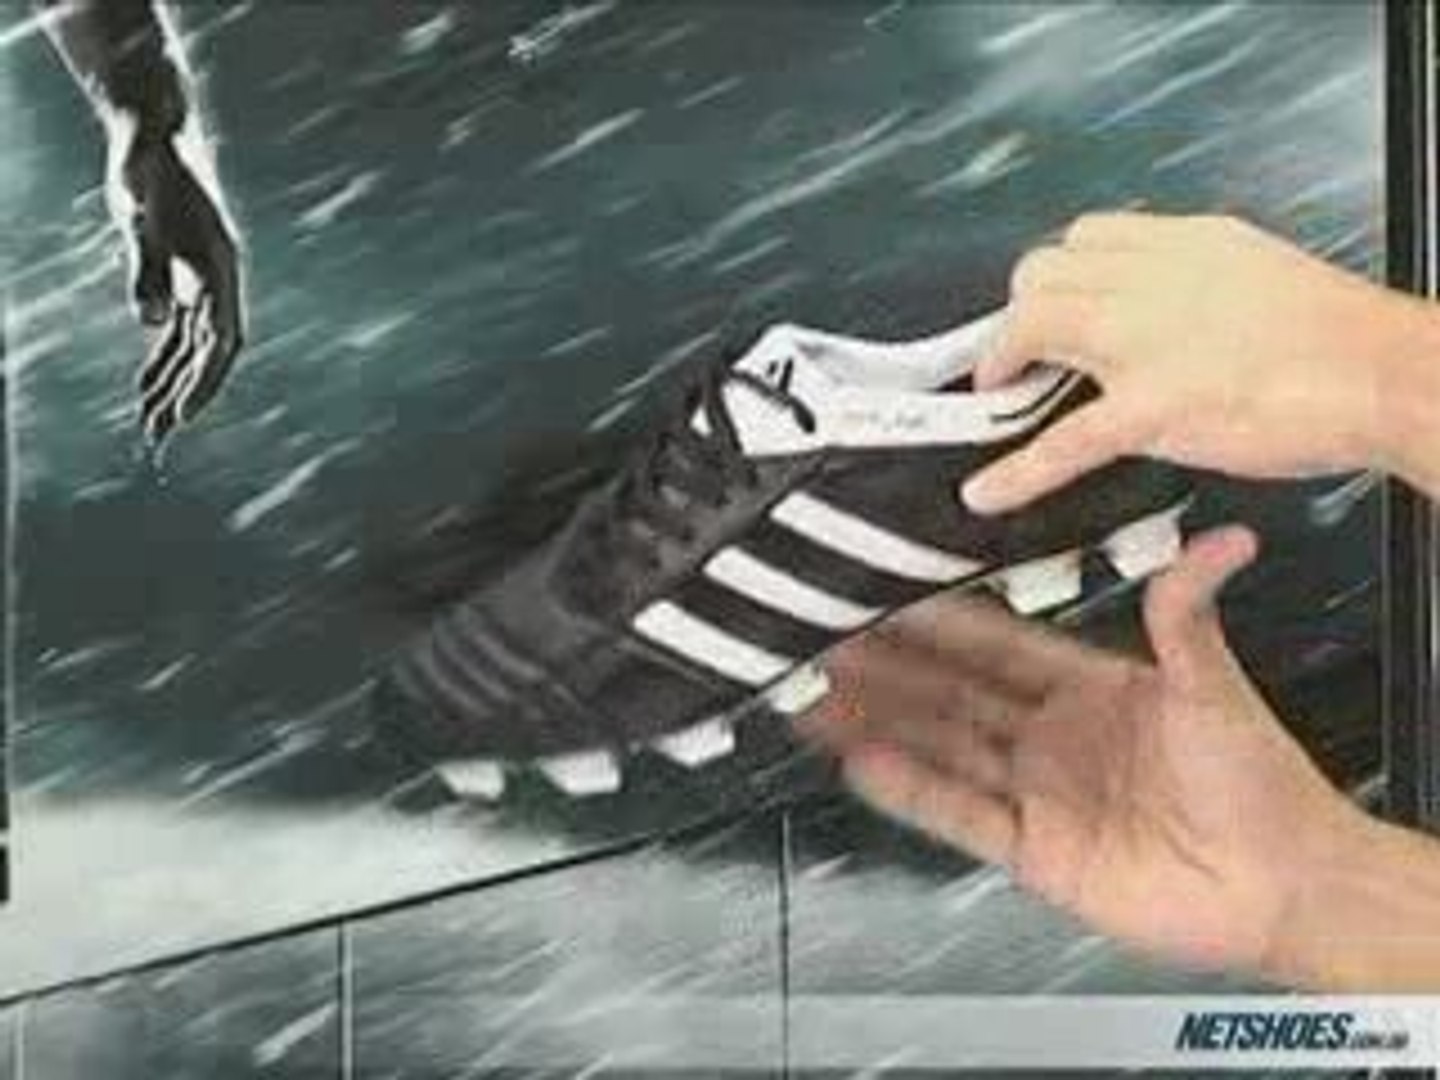 Netshoes - Chuteira Adidas adiPURE 2 TRX FG - Vídeo Dailymotion